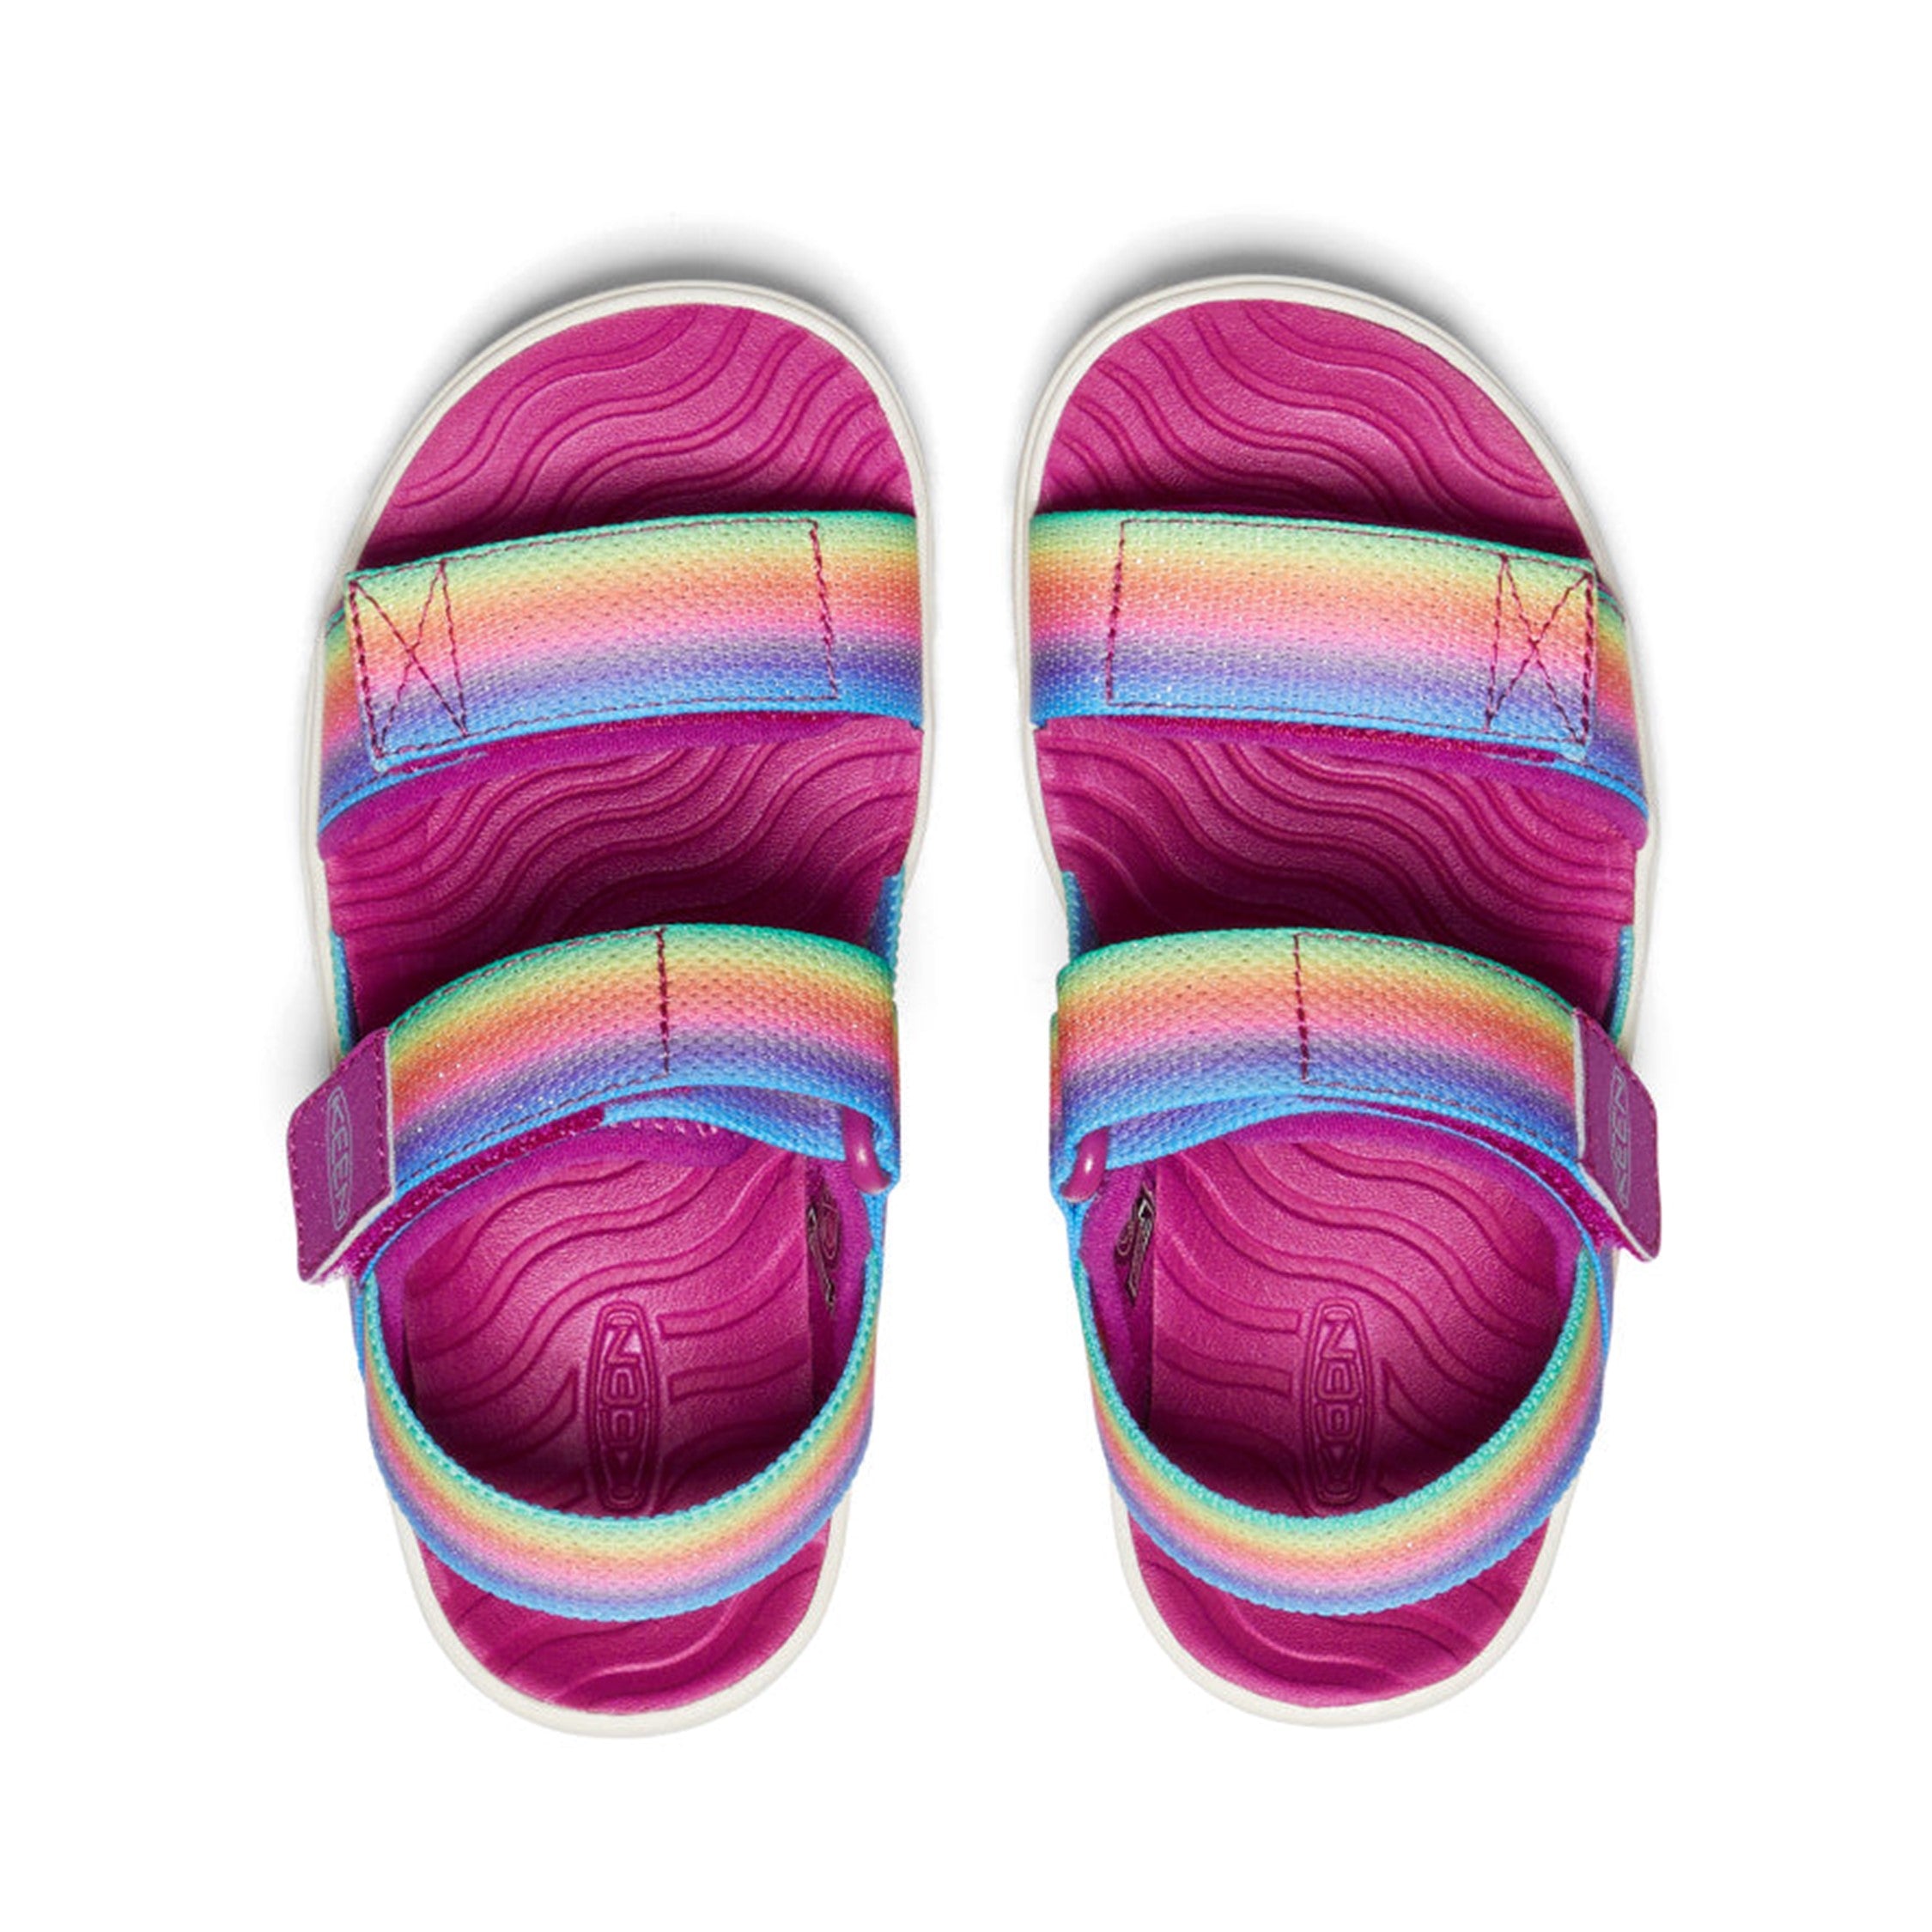 Elle Backstrap Kids' Sandal - Rainbow/Festival Fuchsia